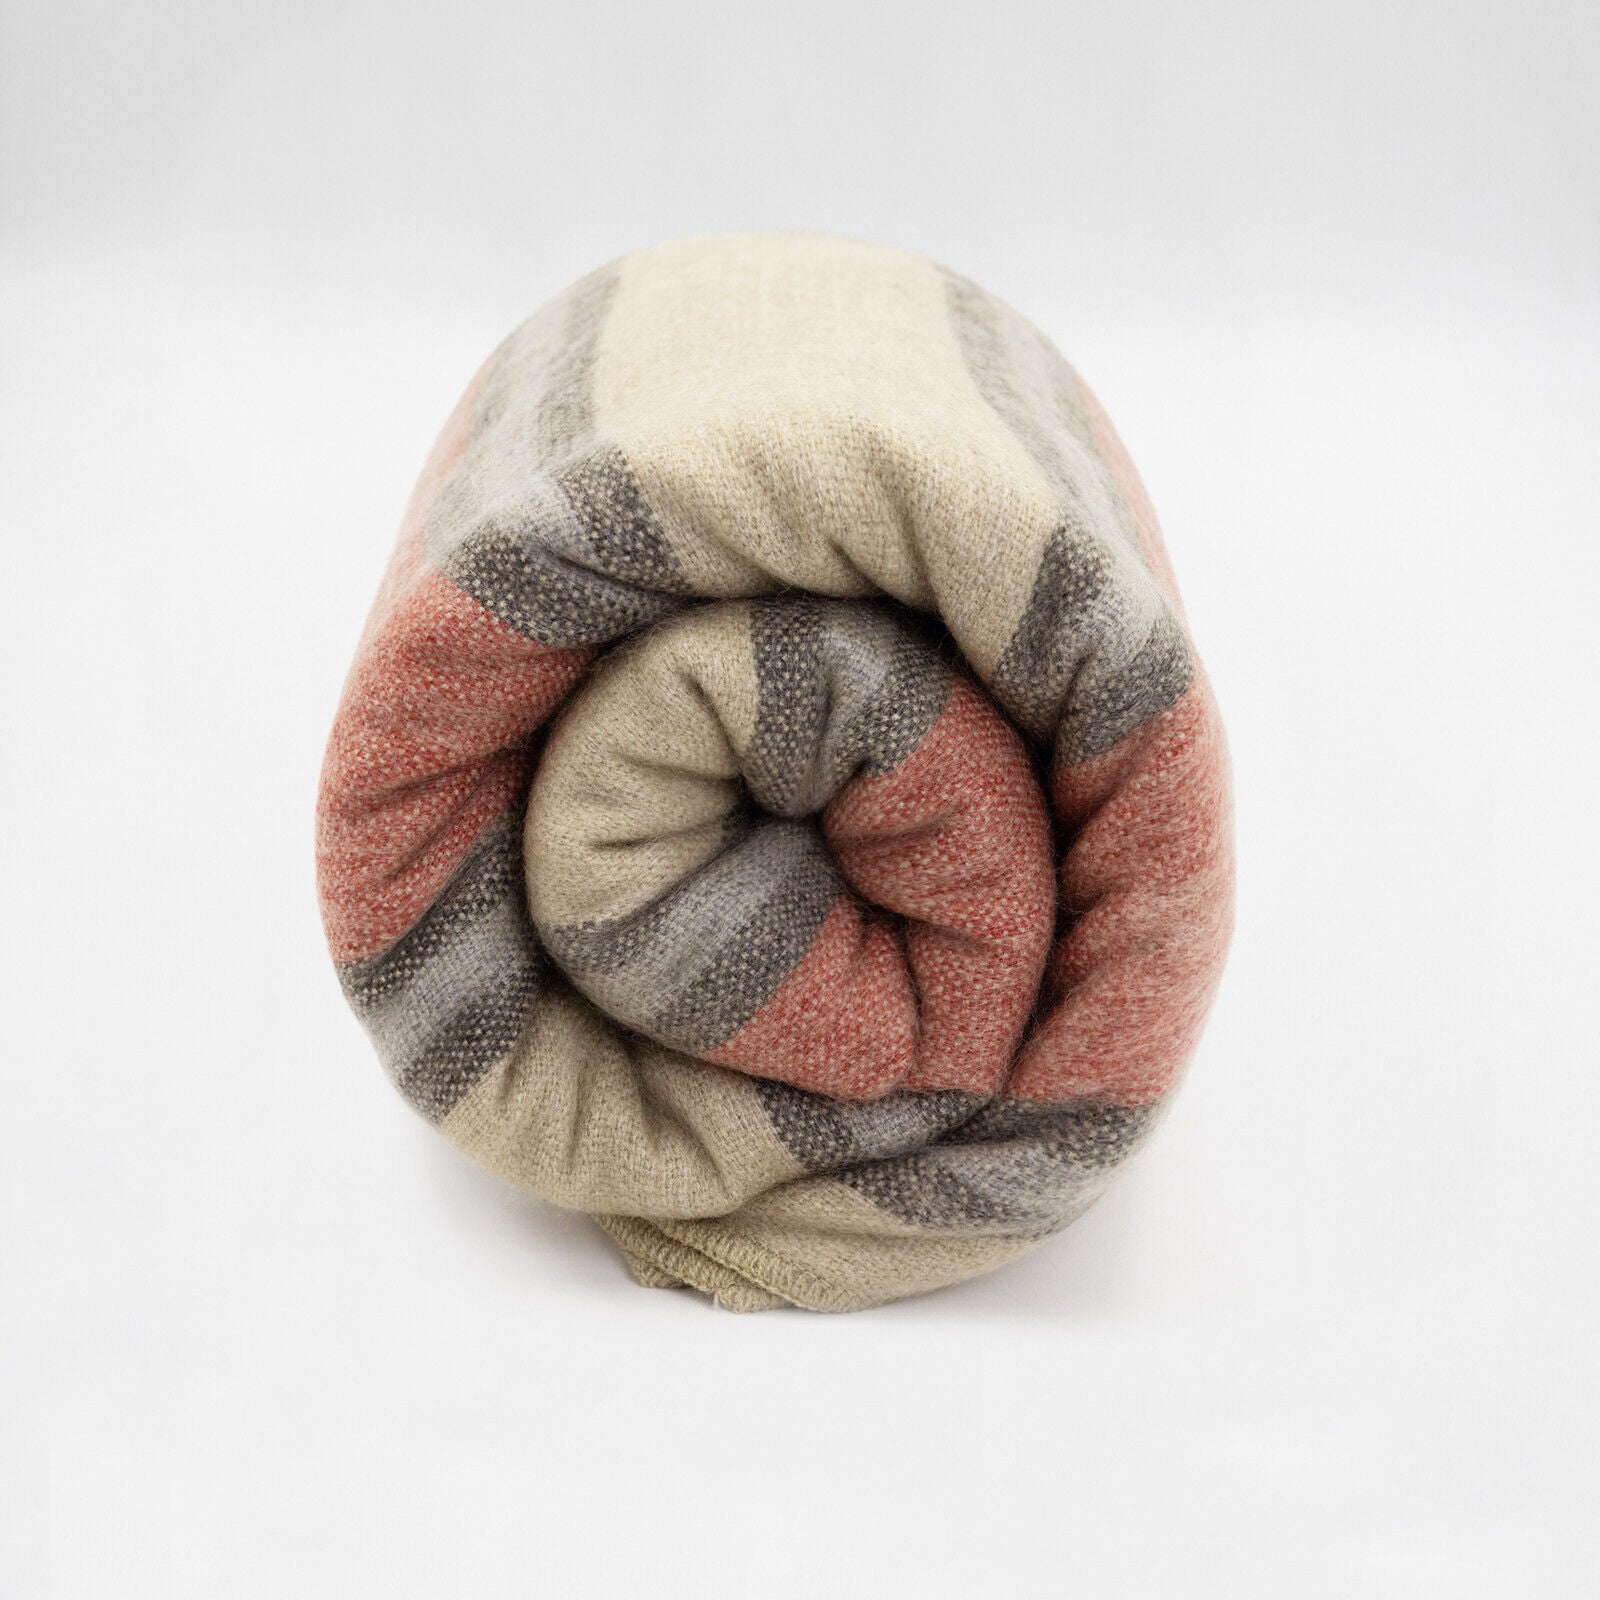 Palanda - Baby Alpaca Wool Throw Blanket / Sofa Cover - Queen 95" x 67" - cream crimson stripes pattern